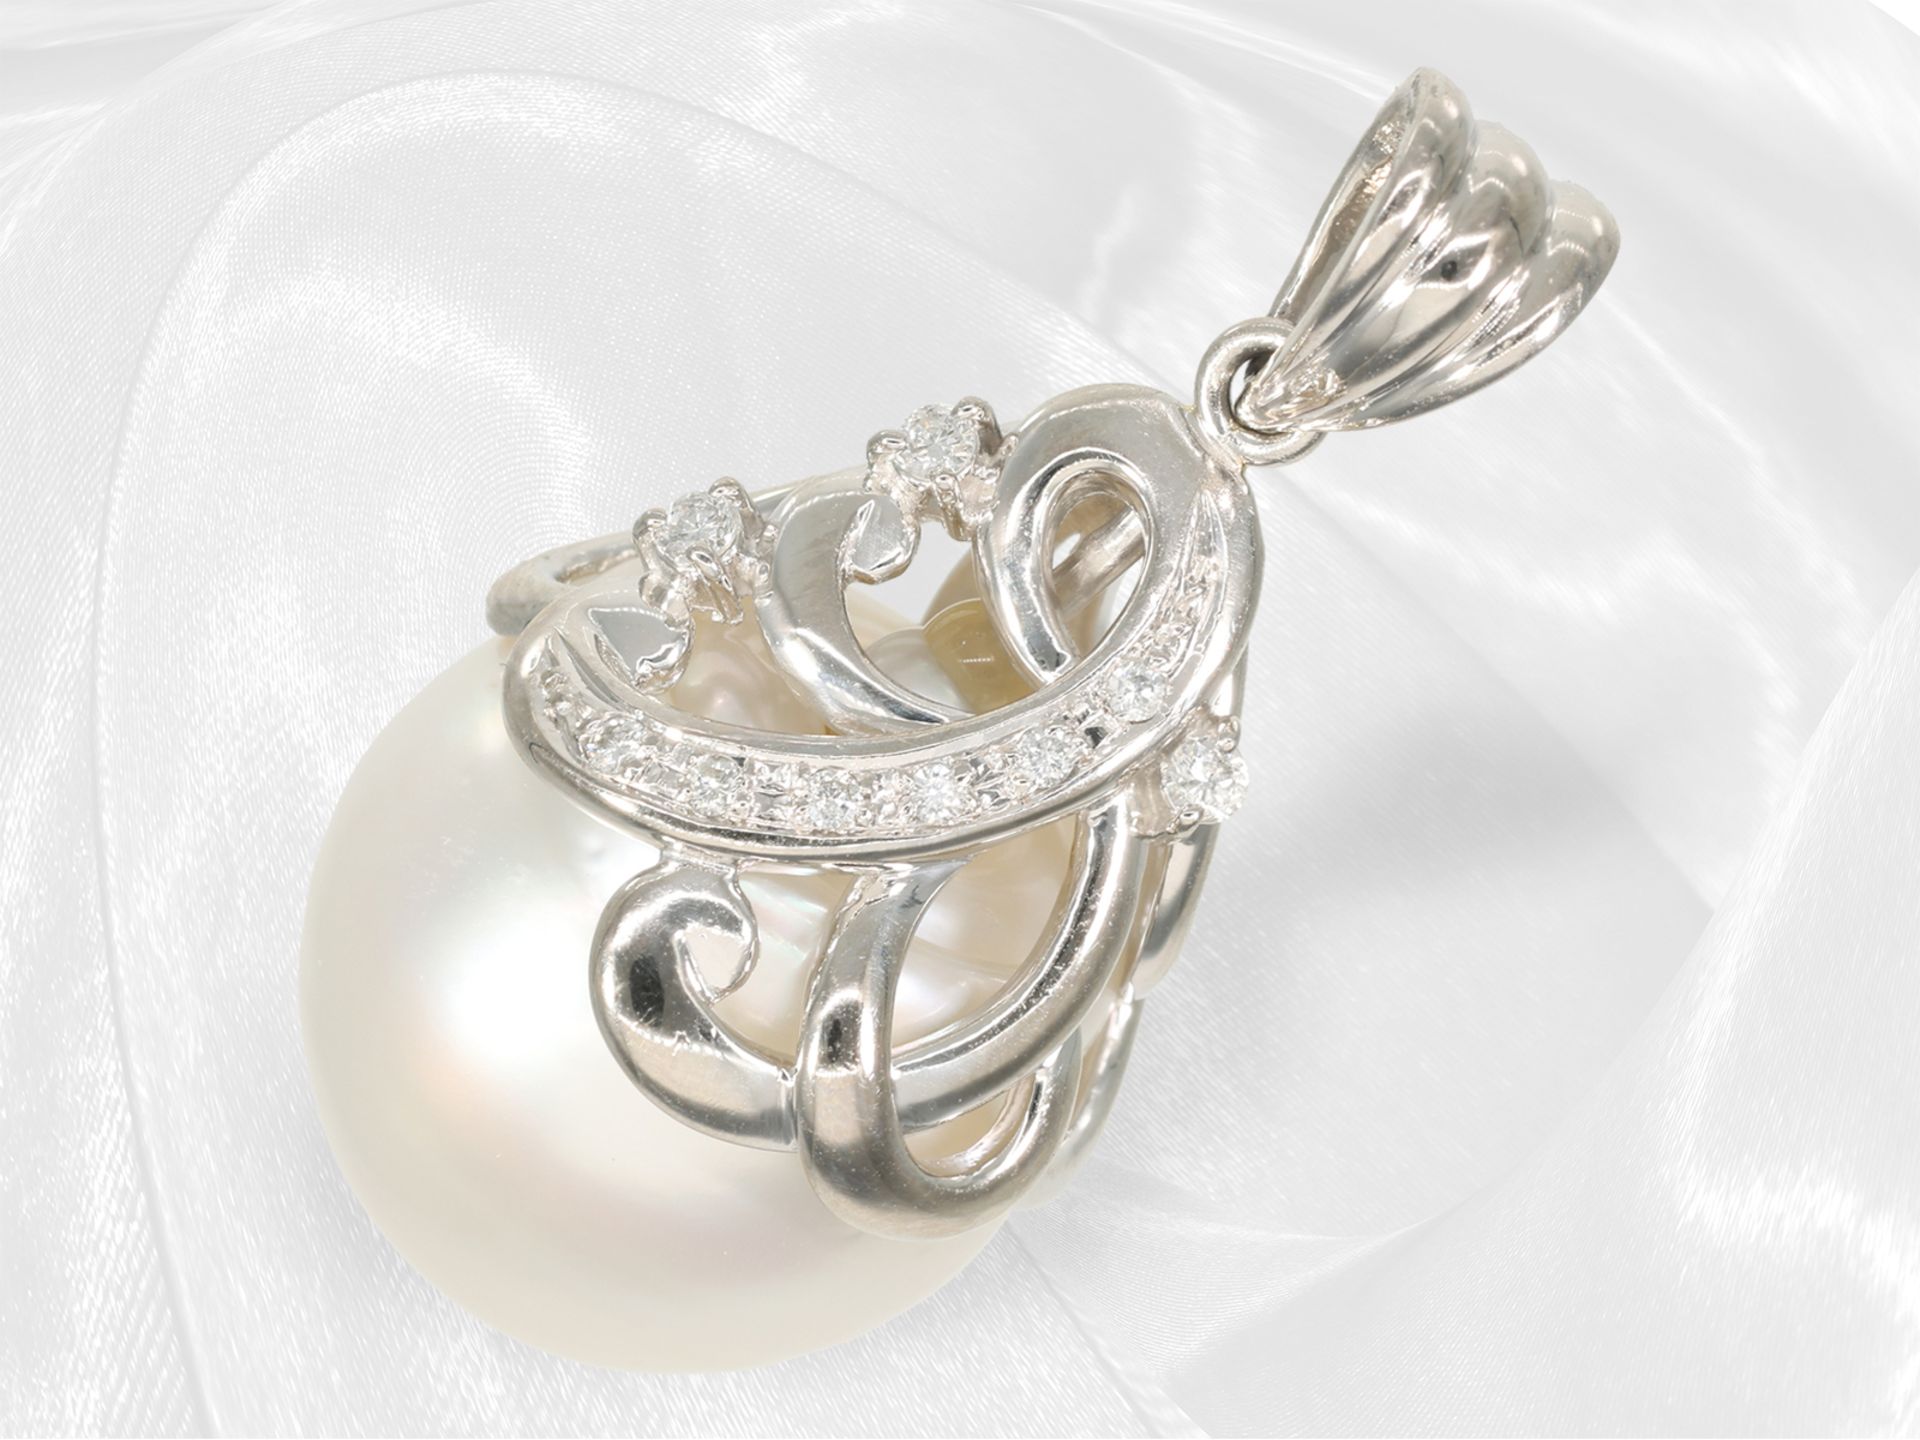 Beautiful unworn platinum South Sea pearl pendant with brilliant-cut diamonds - Image 7 of 10